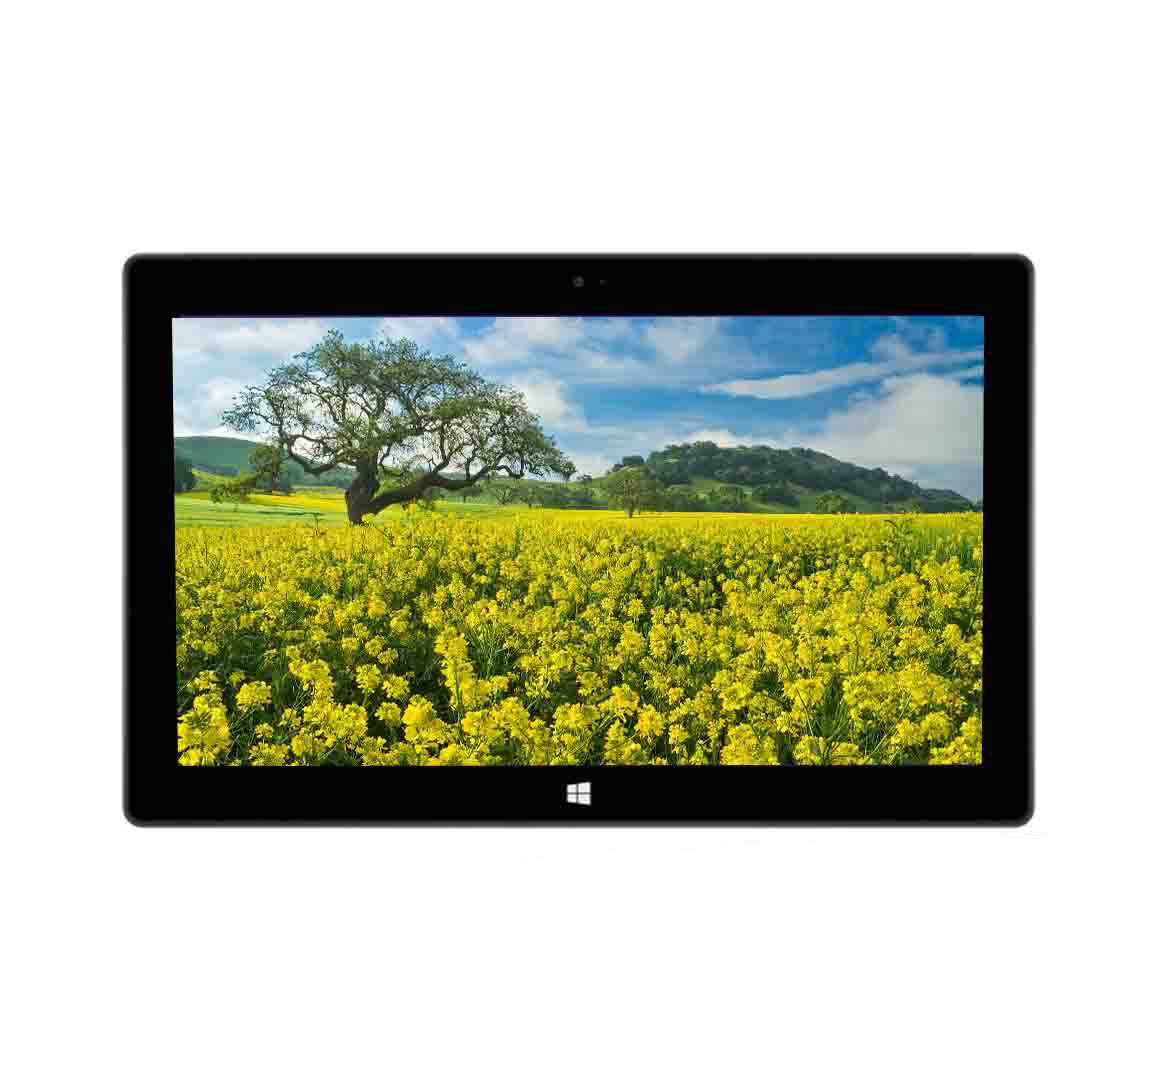 Microsoft Surface Pro 2 Business Laptop, Intel Core i5-4th Generation CPU, 4GB RAM, 128GB SSD, 10.1 inch Touchscreen, Win 10, Refurbished Laptop